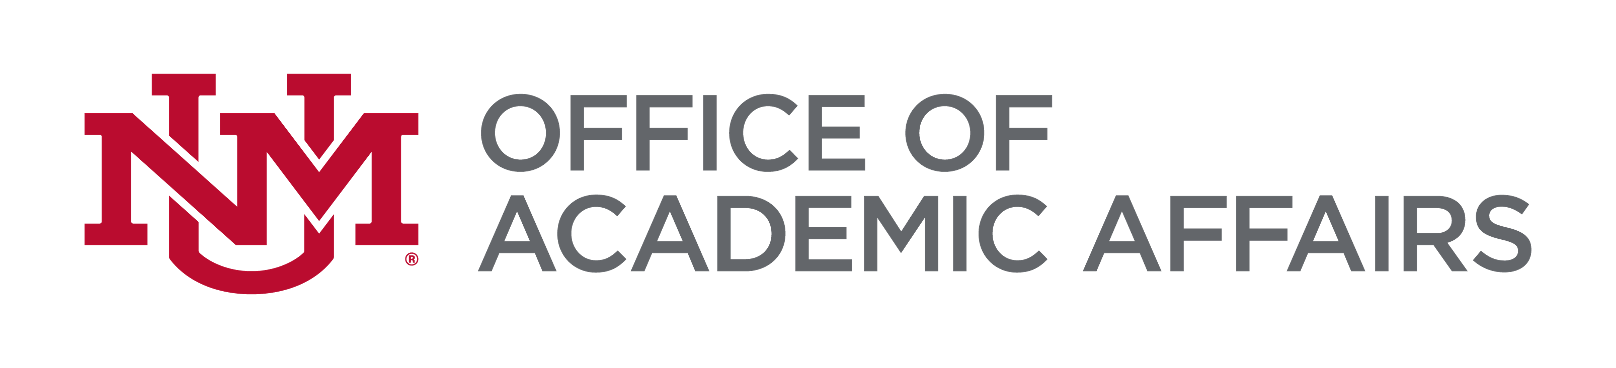 unm-academic-affairs-logo.png